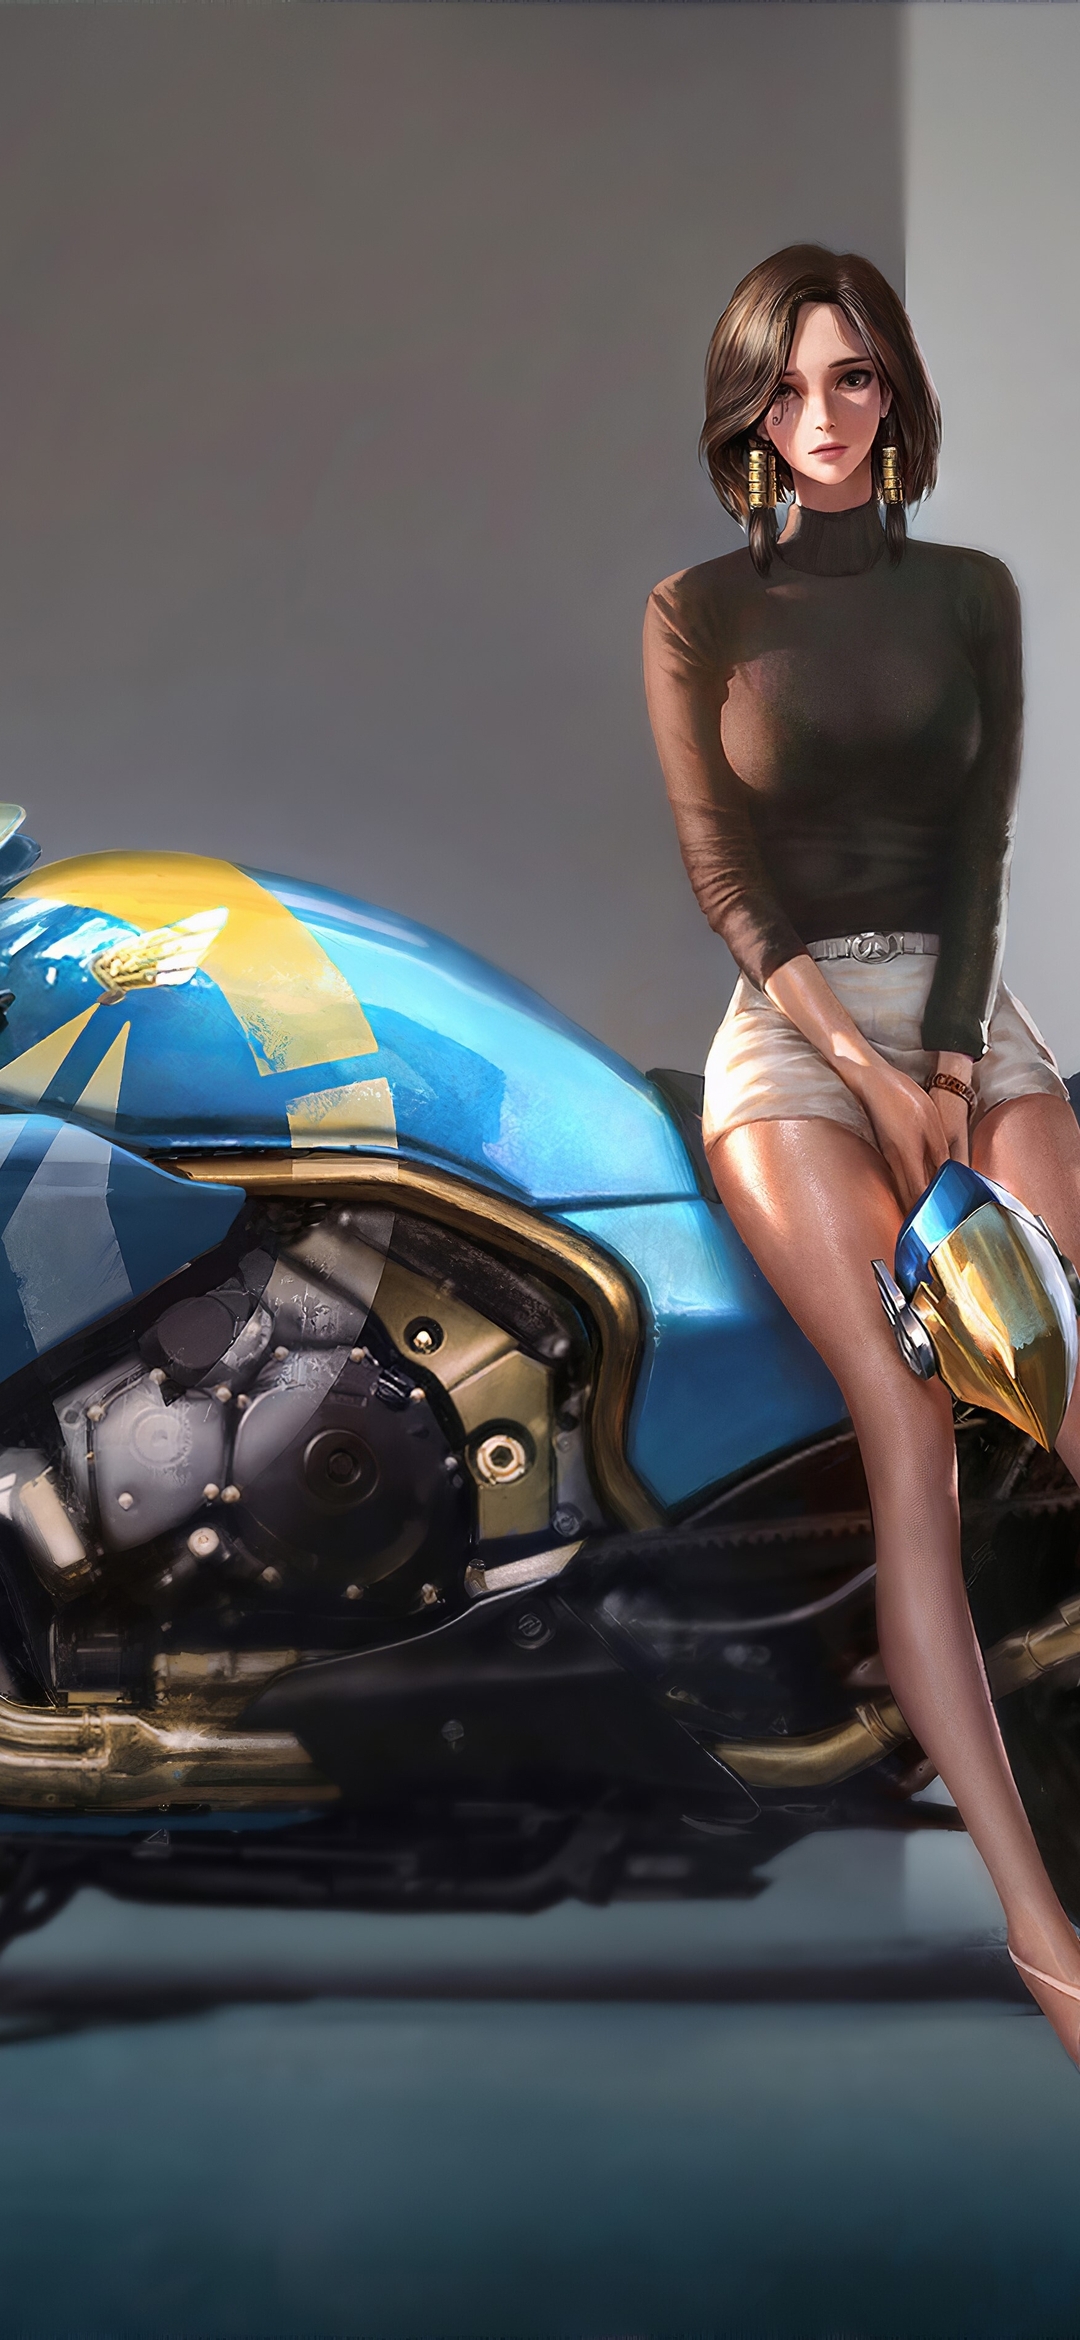 Картинка: Девушка, Pharah, игра, Overwatch, байк, фон, арт, ножки, шлем, взгляд